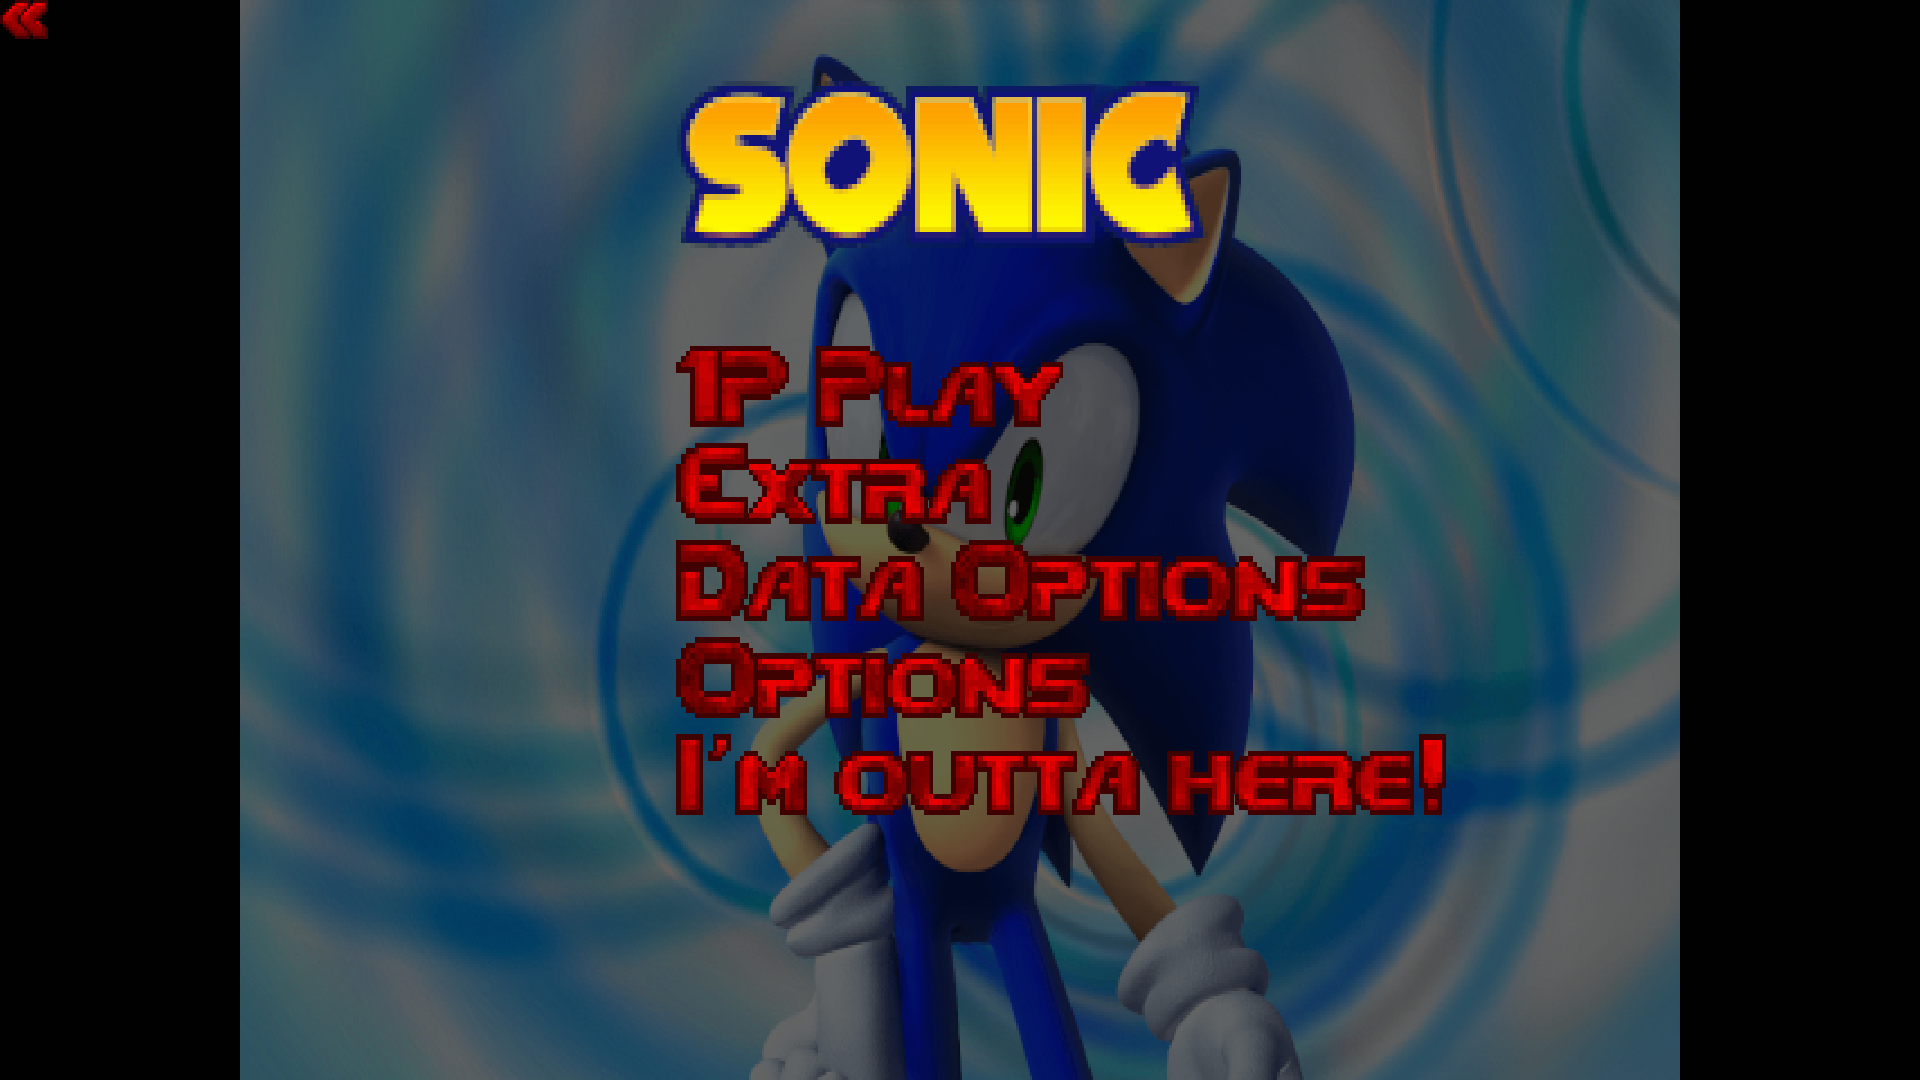 Sonic the Hedgehog in DOOM version v0.1 title screen